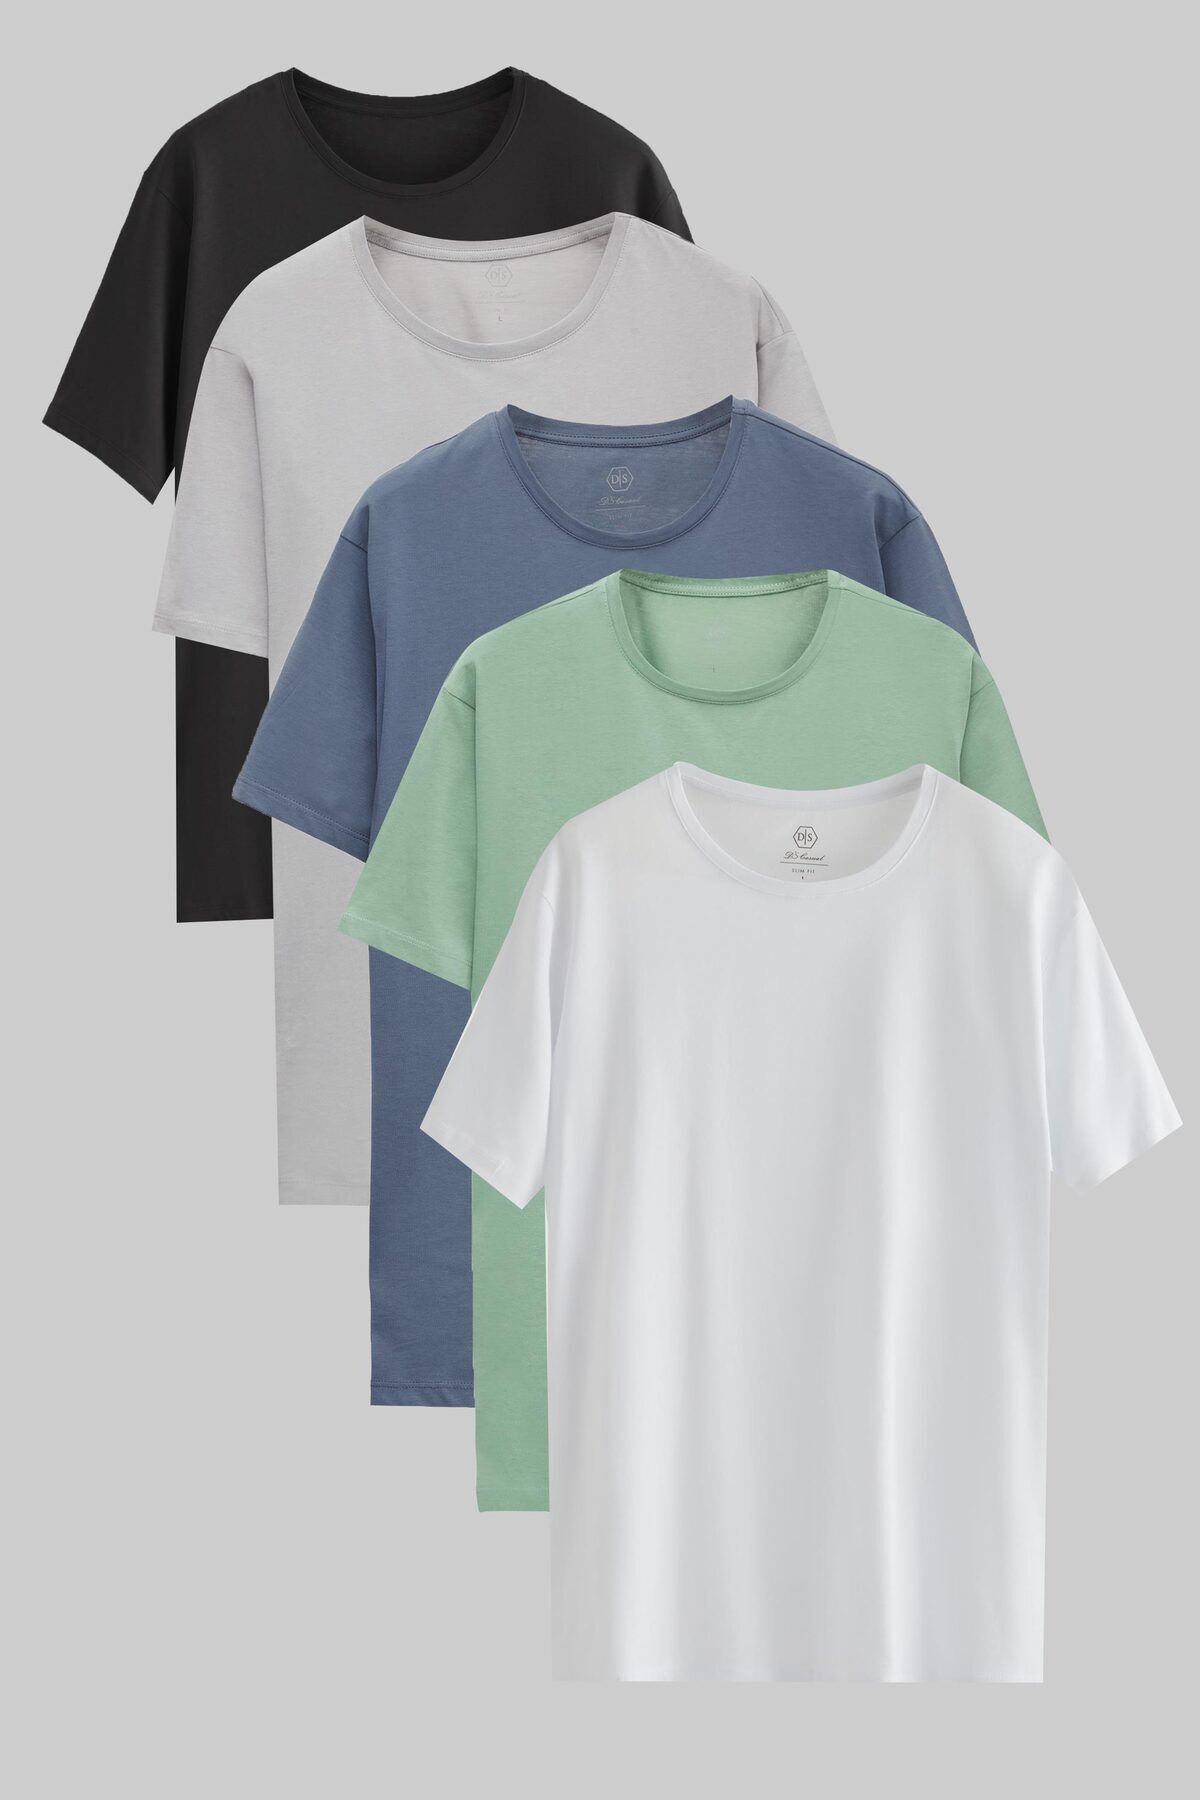 D'S Damat Ds Damat Slim Fit Antrasit/Gri/Füme/Yeşil/Beyaz 5'Li T-Shirt